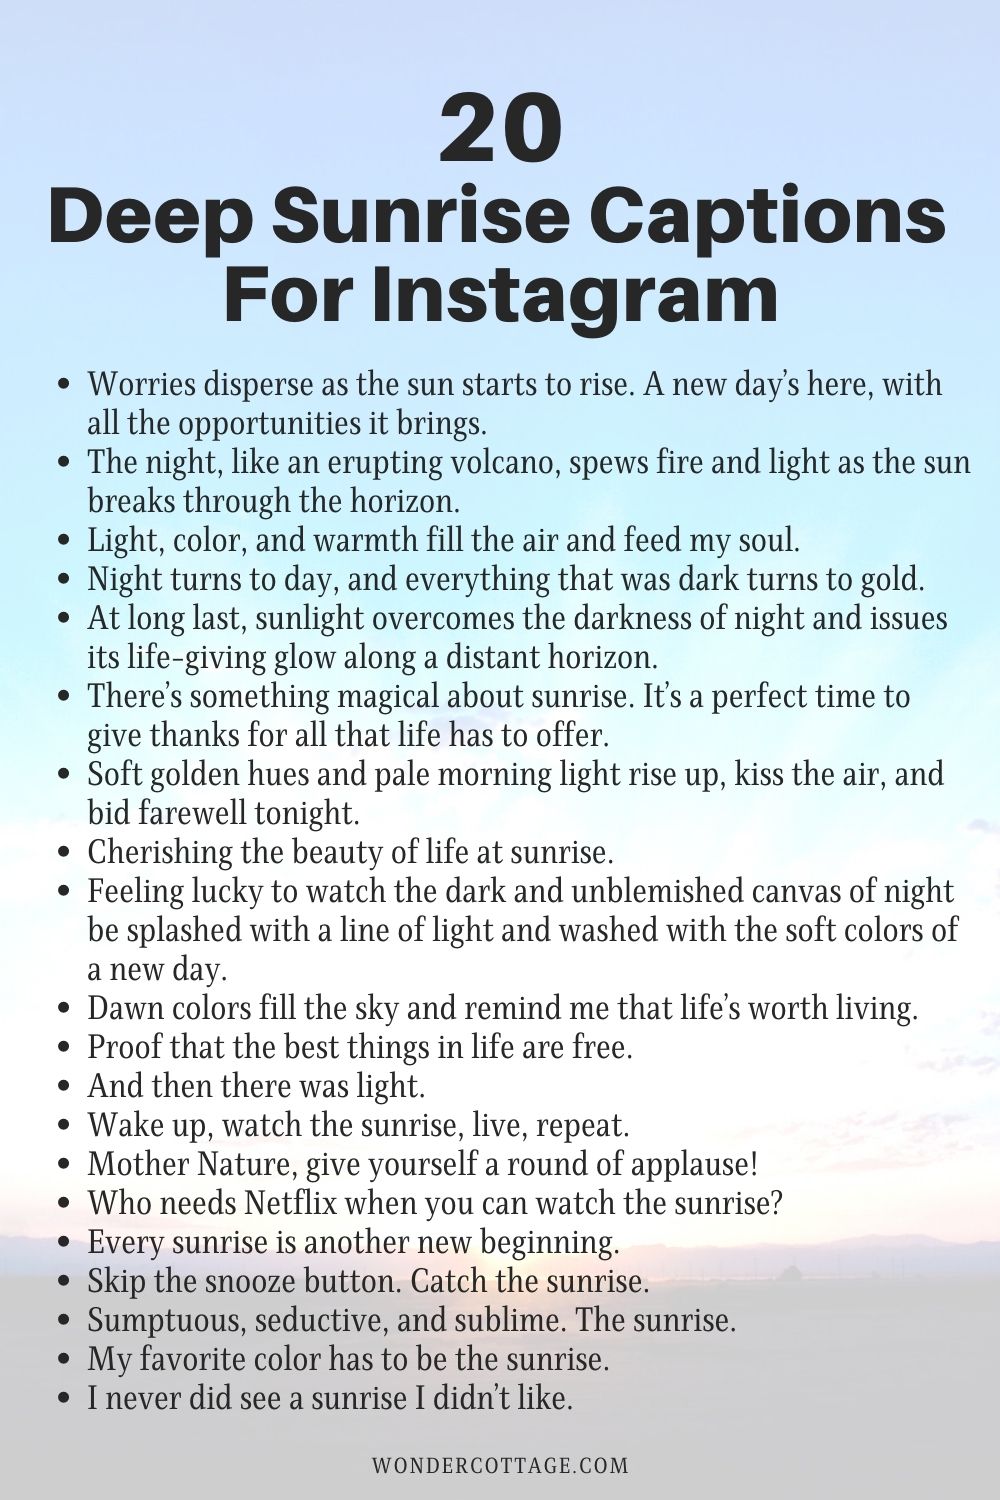 Deep Sunrise Captions For Instagram